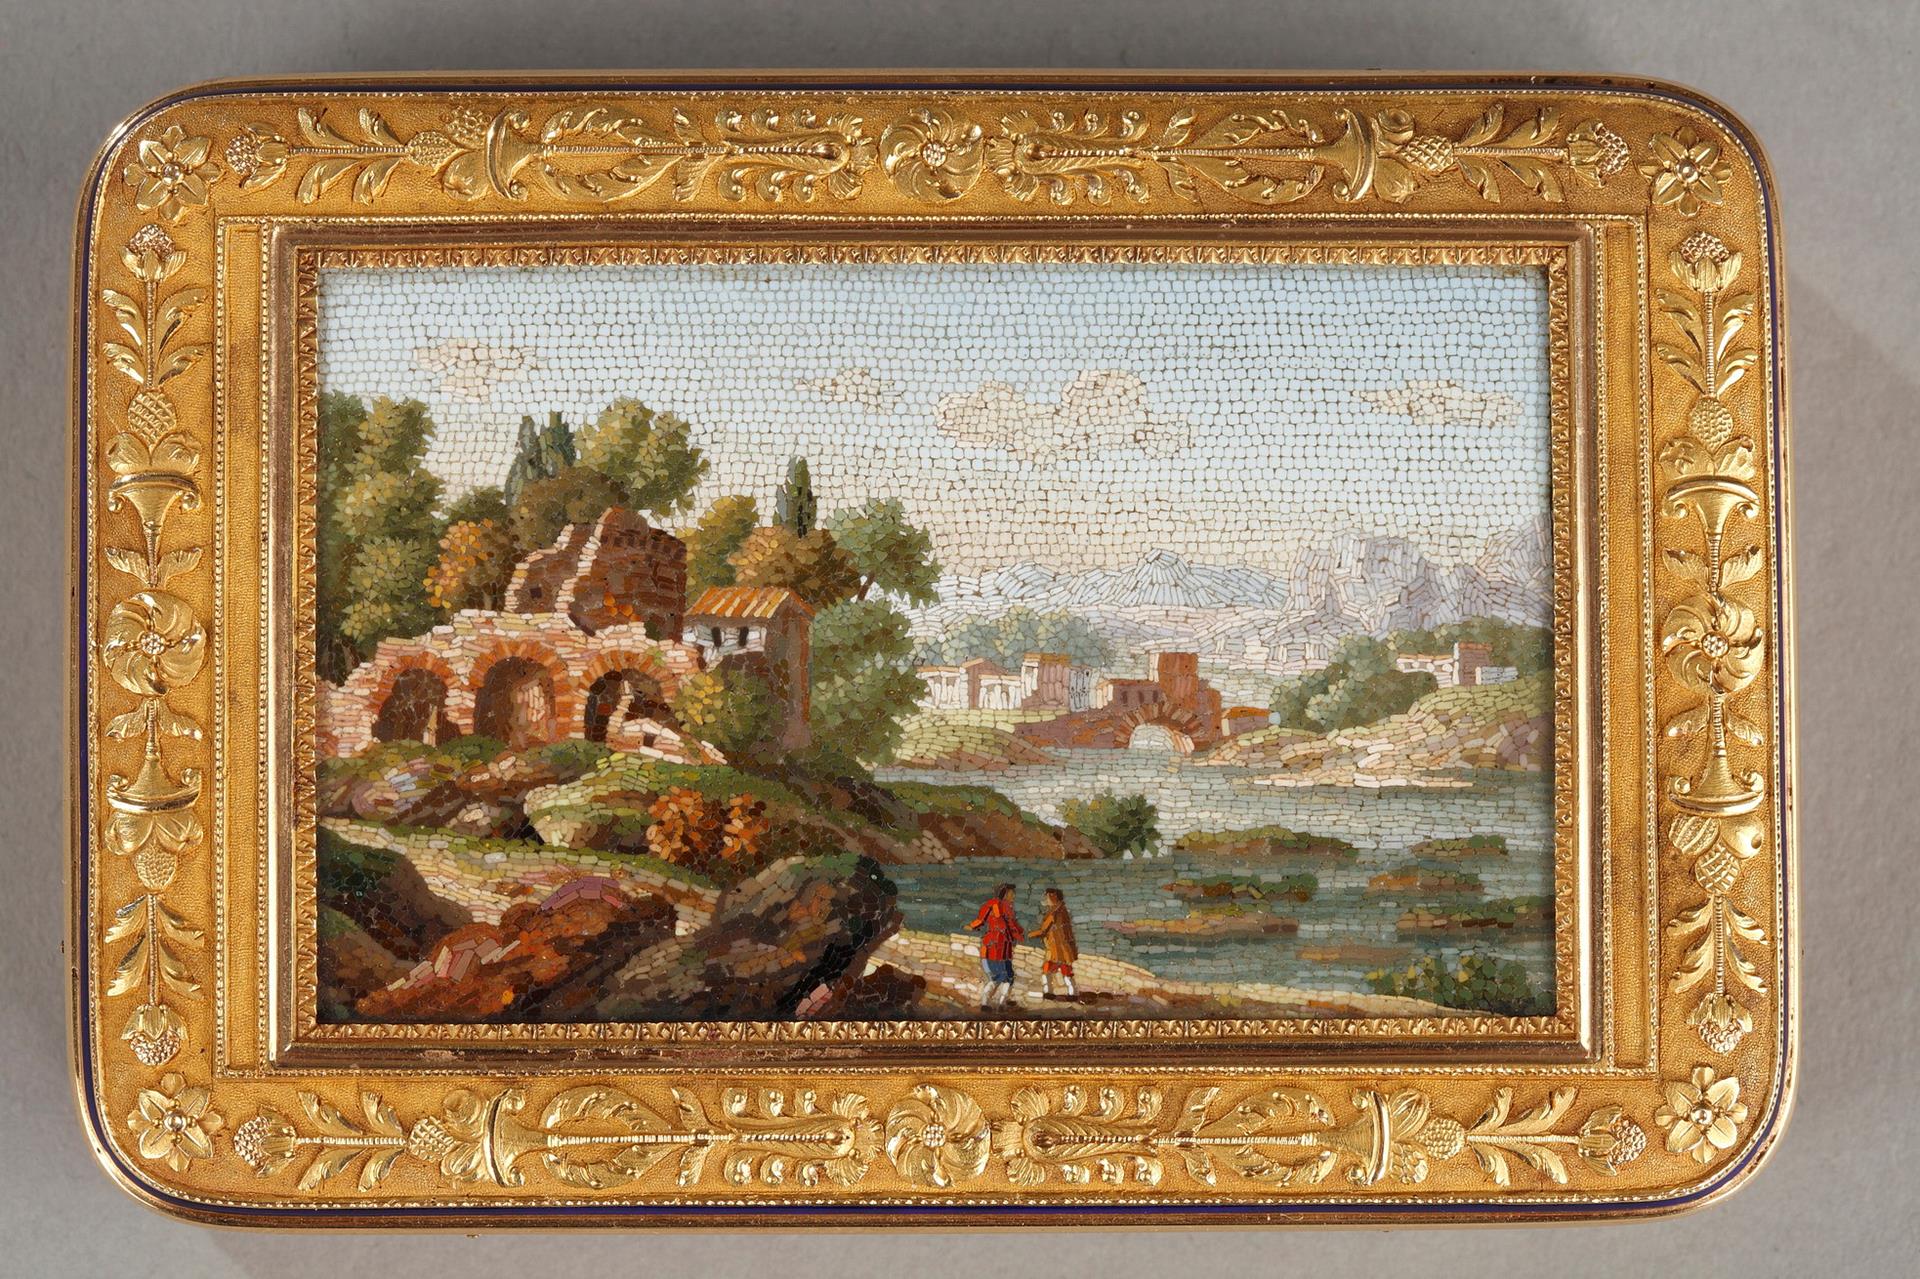 micromosaic, box, gold, landscape, Roma, 19th century